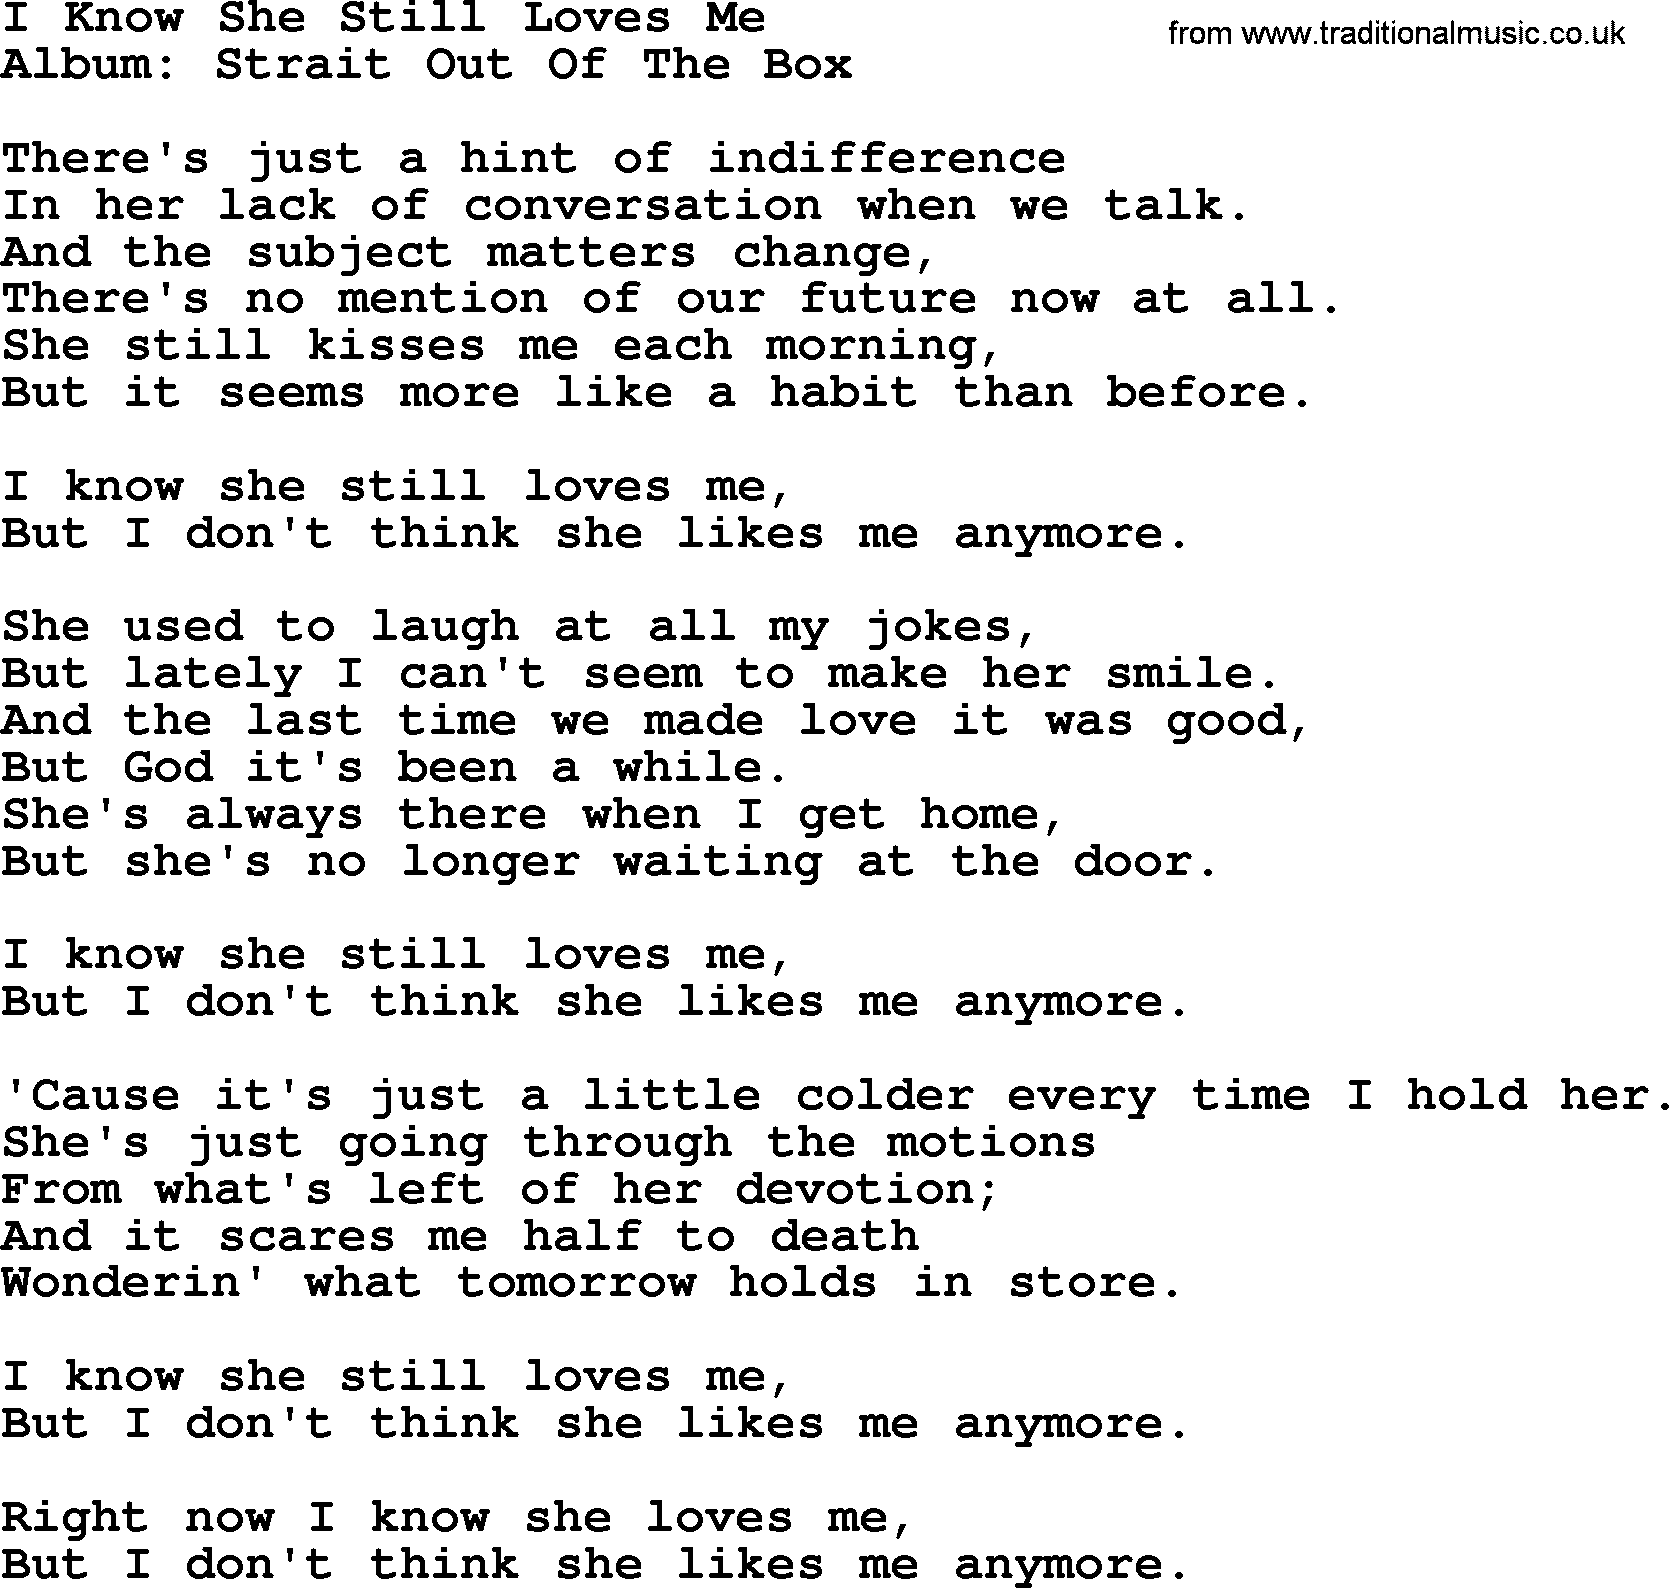 George Strait song: I Know She Still Loves Me, lyrics